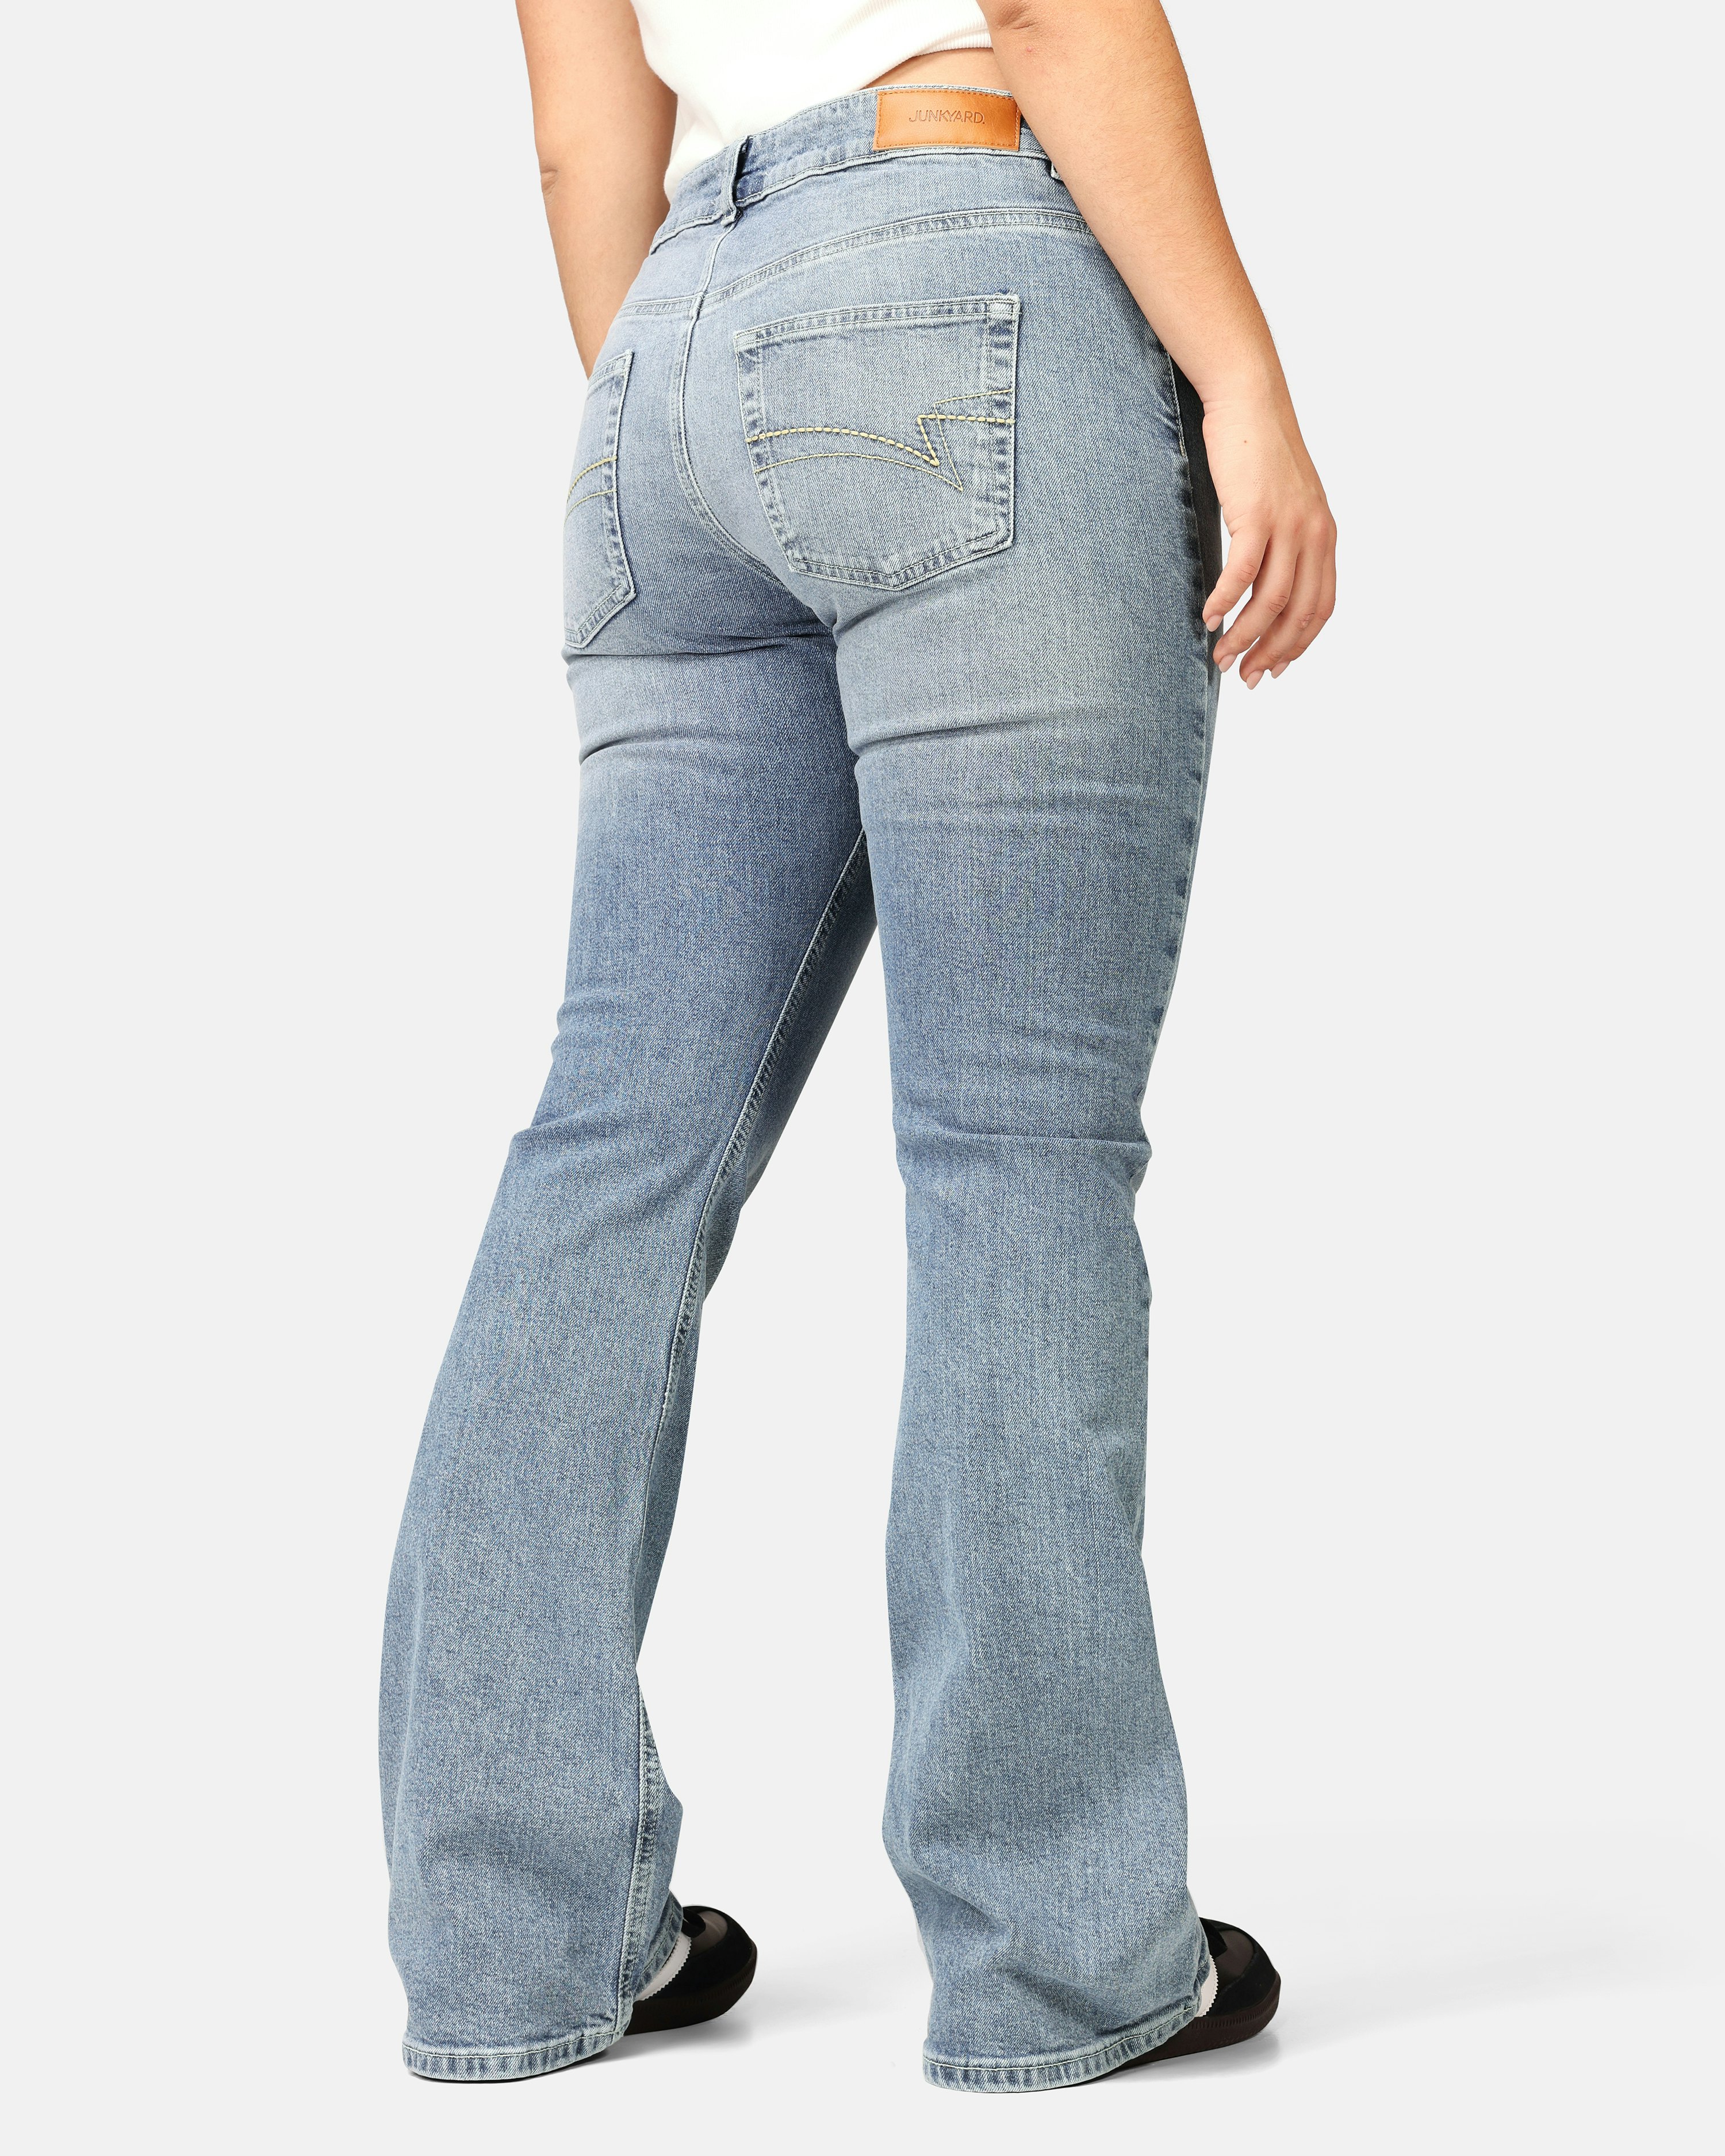 JUNKYARD Jeans - Bootcut Low Light blue, Women